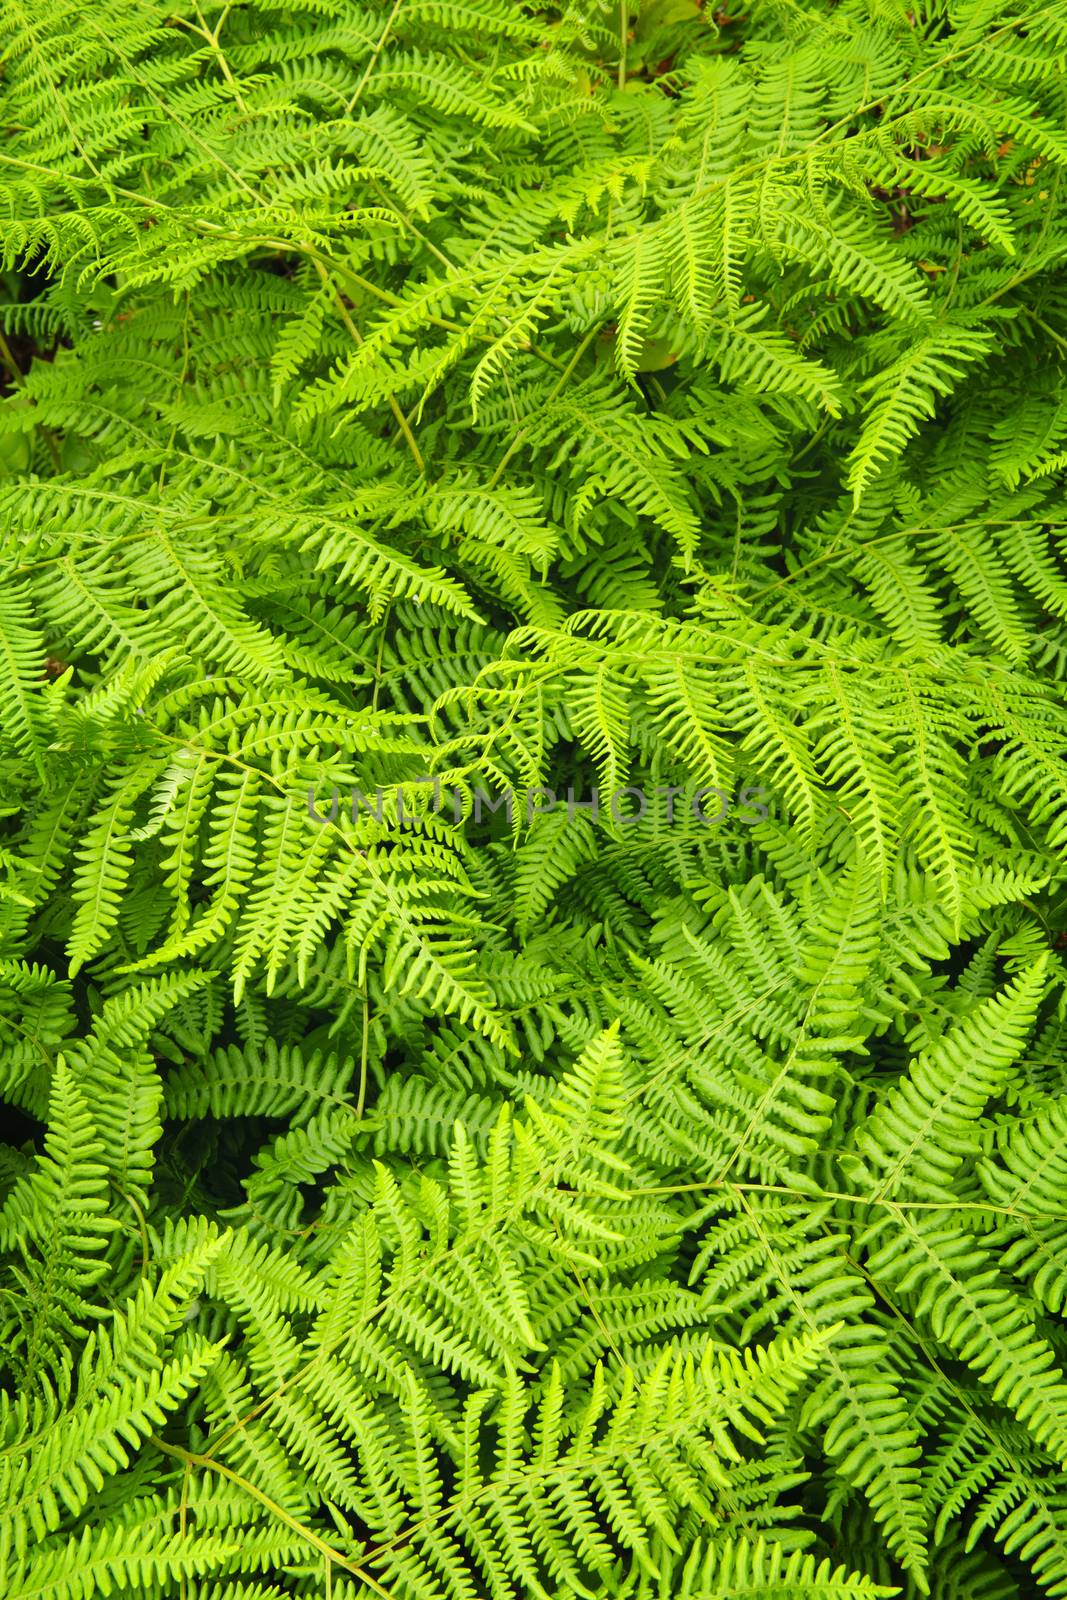 Background of lush bright green fern plants